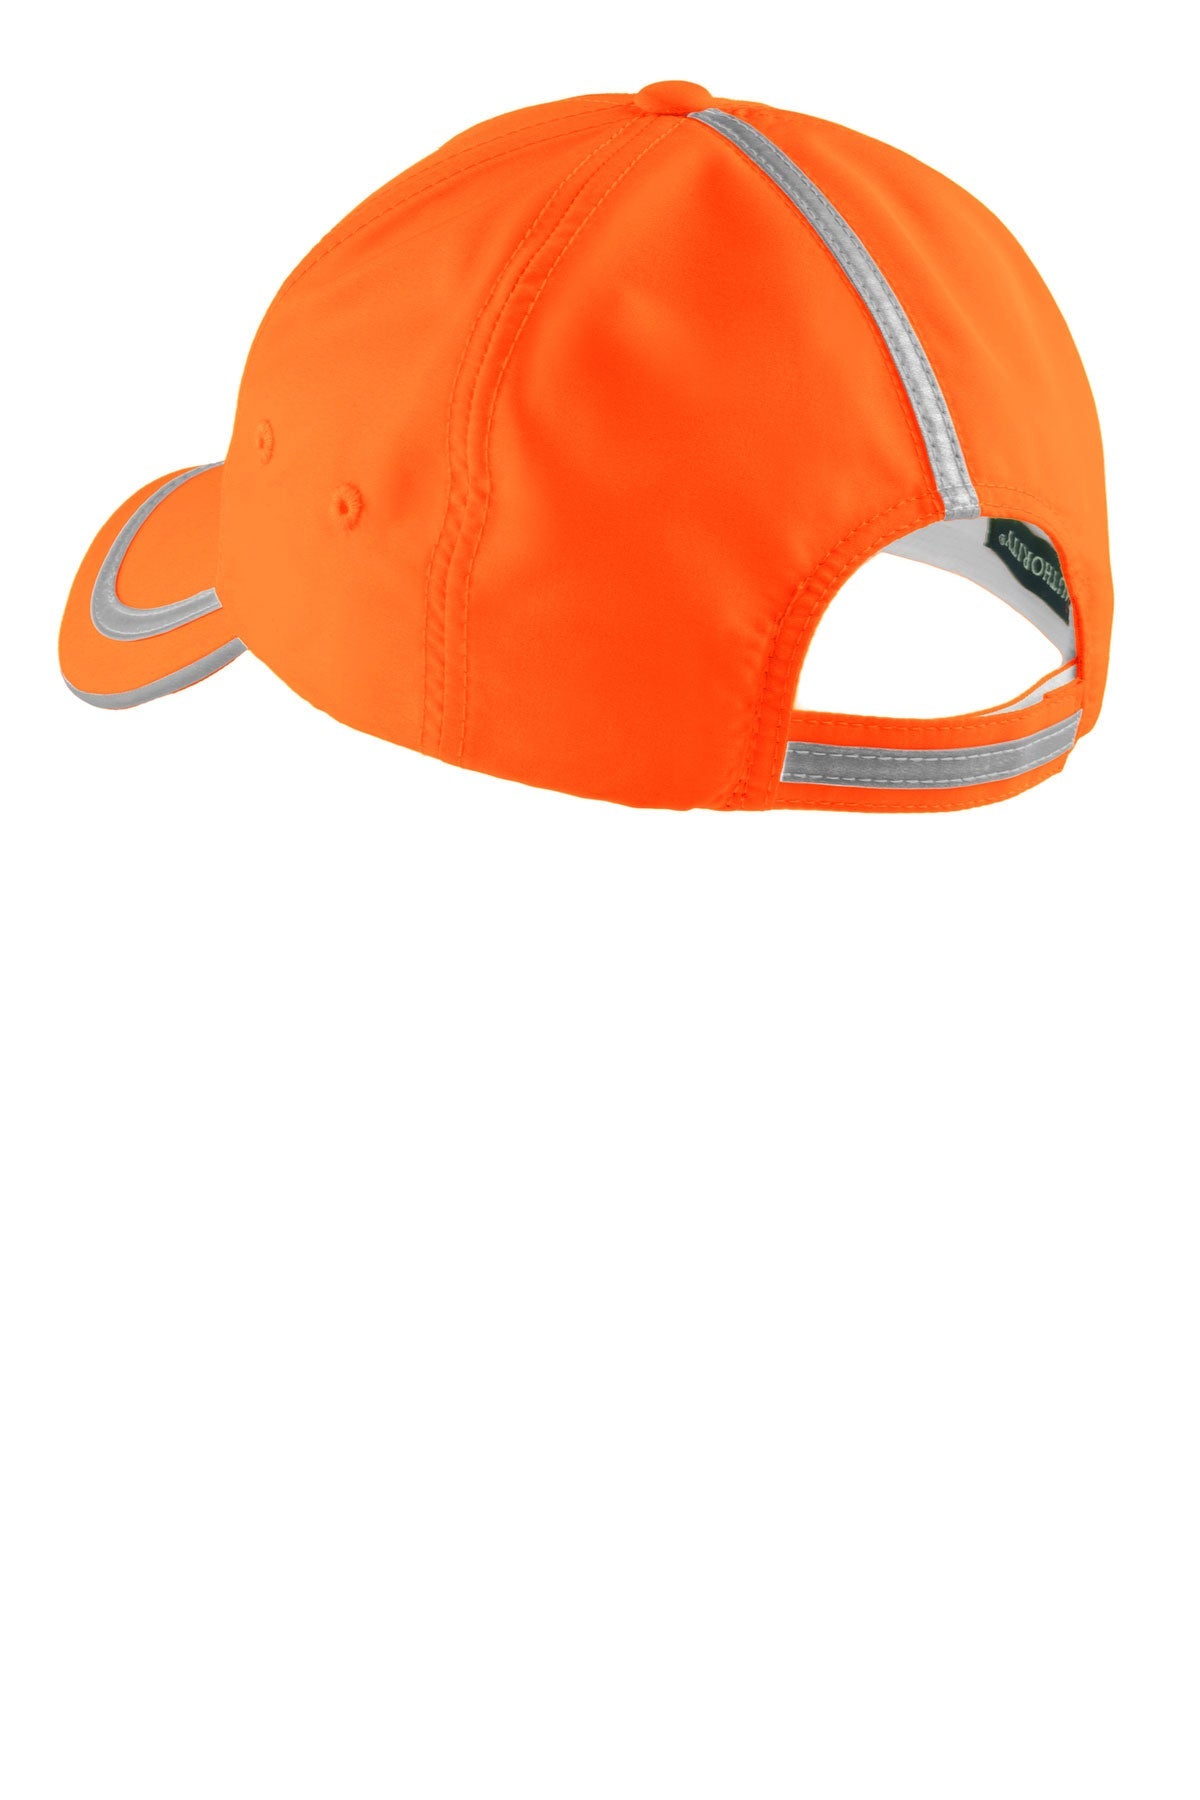 Port Authority Enhanced Branded Visibility Caps, Safety Orange/ Reflective